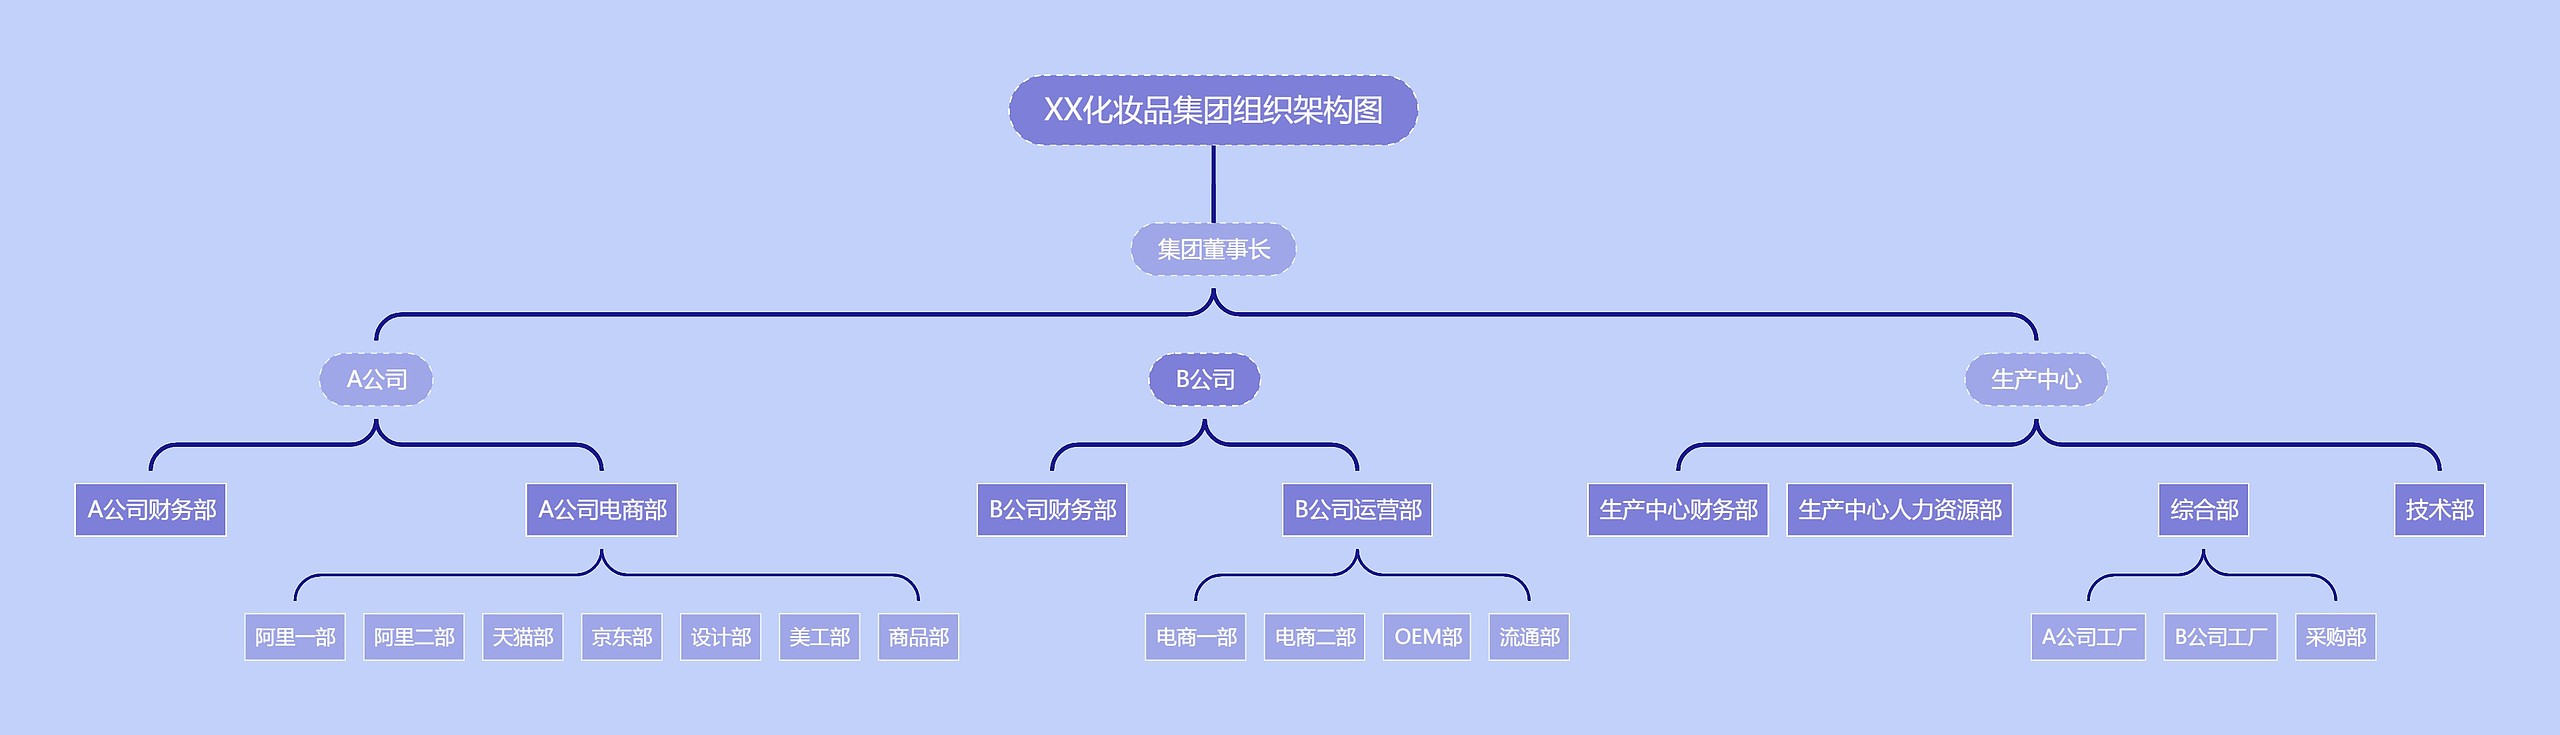 ﻿XX化妆品集团组织架构图